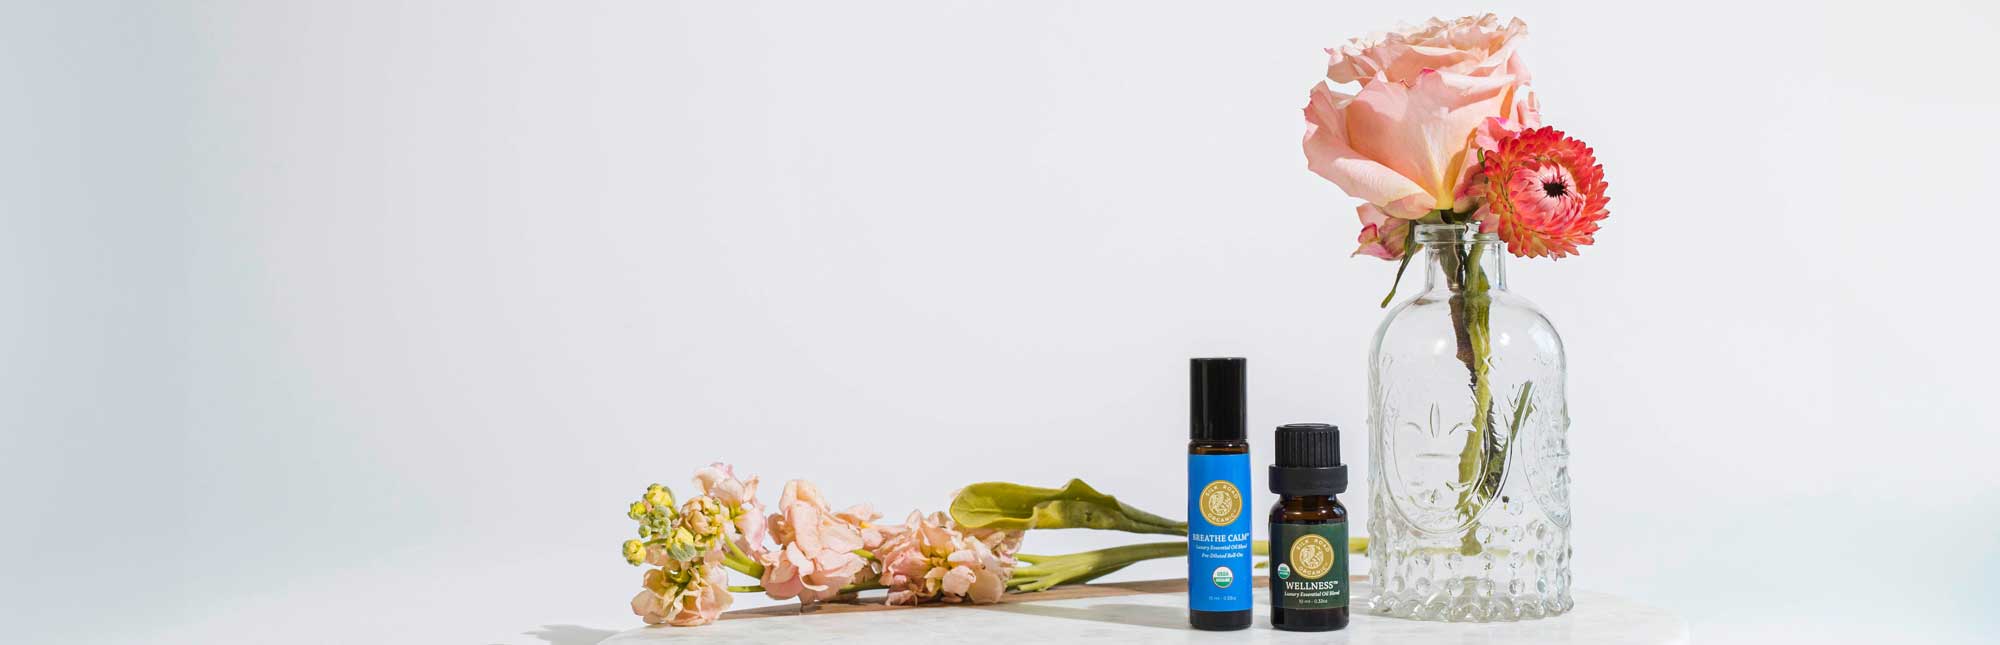 organic essential oils breathe calm wellness blends flowers